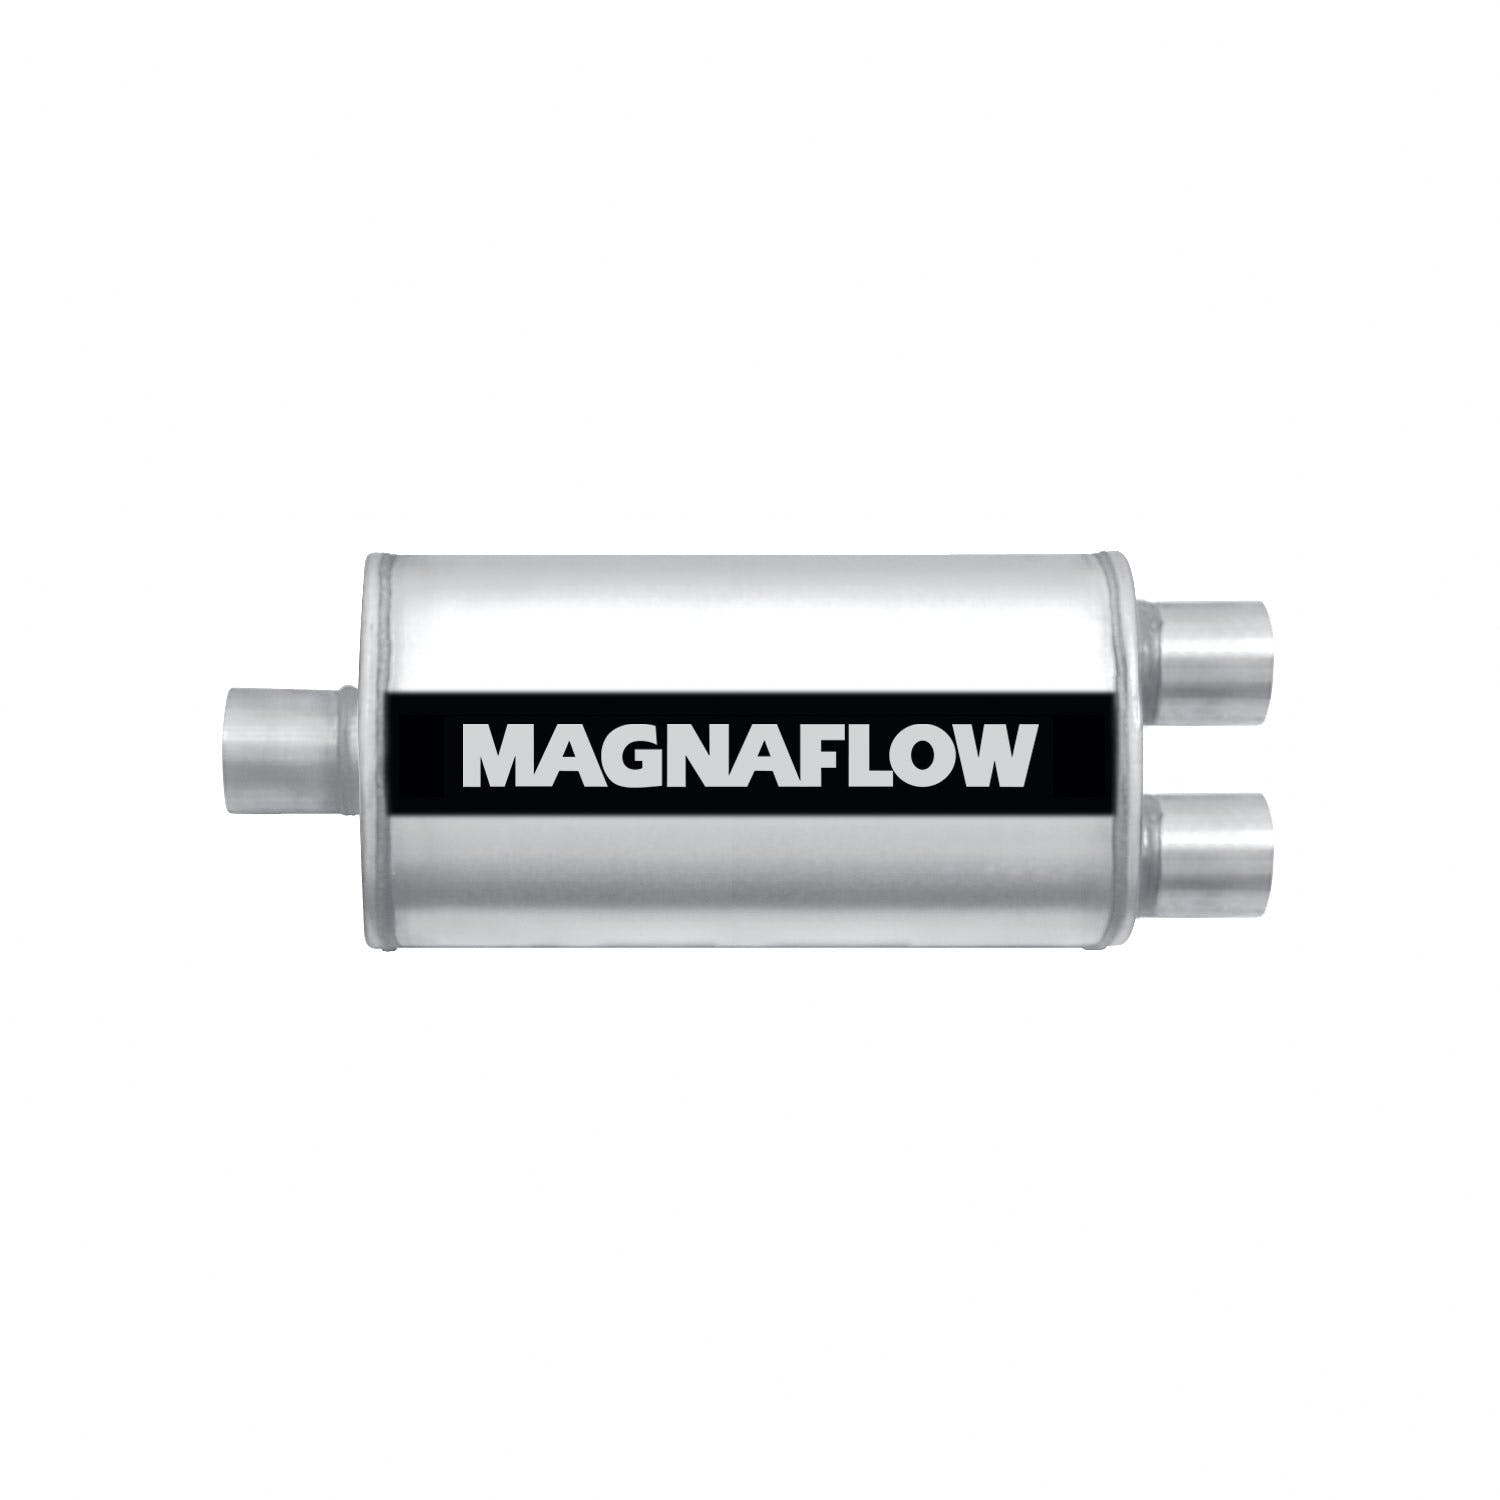 MagnaFlow Exhaust Products 12198 Universal Muffler